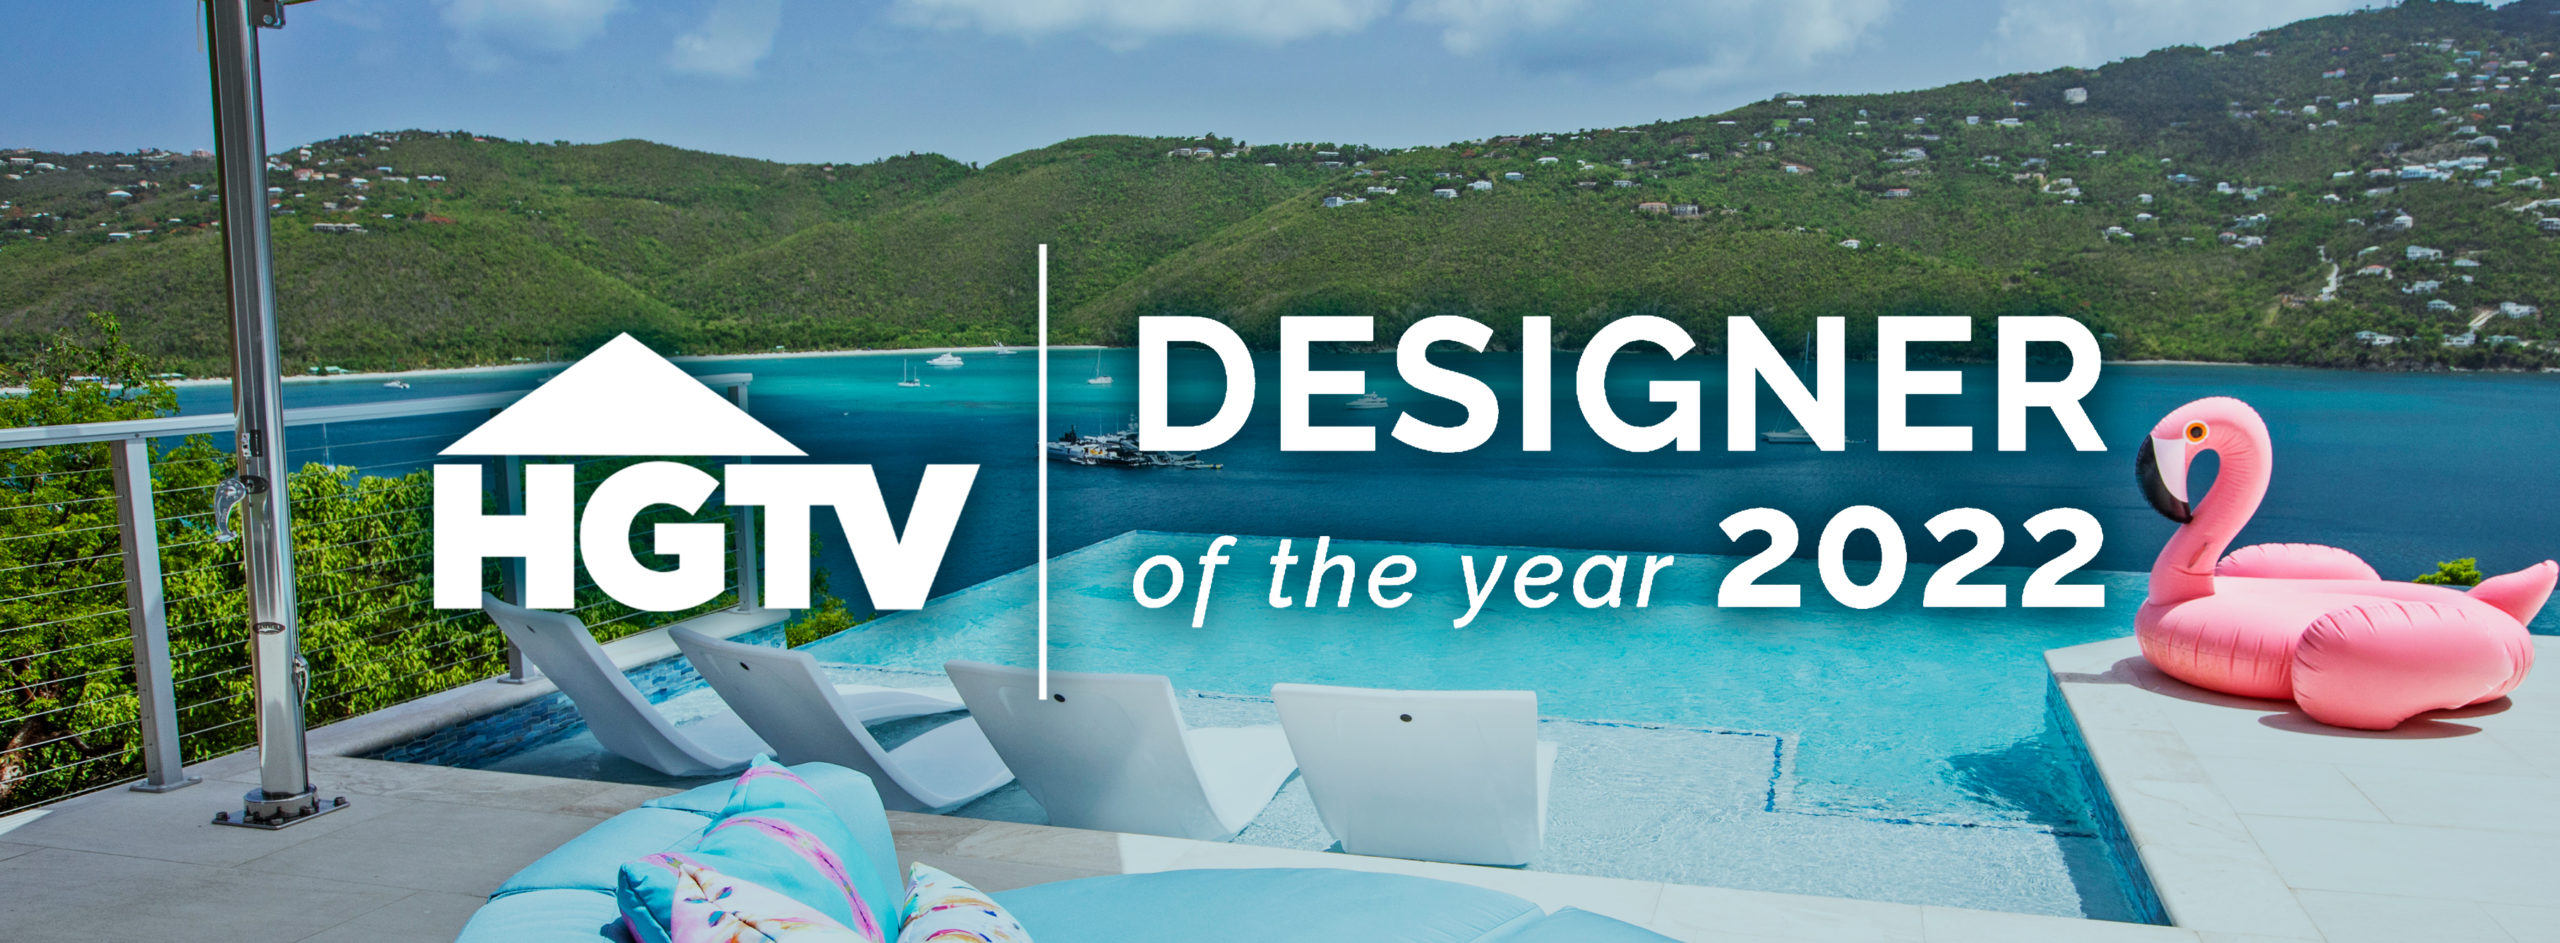 HGTV Designer of the Year 2022